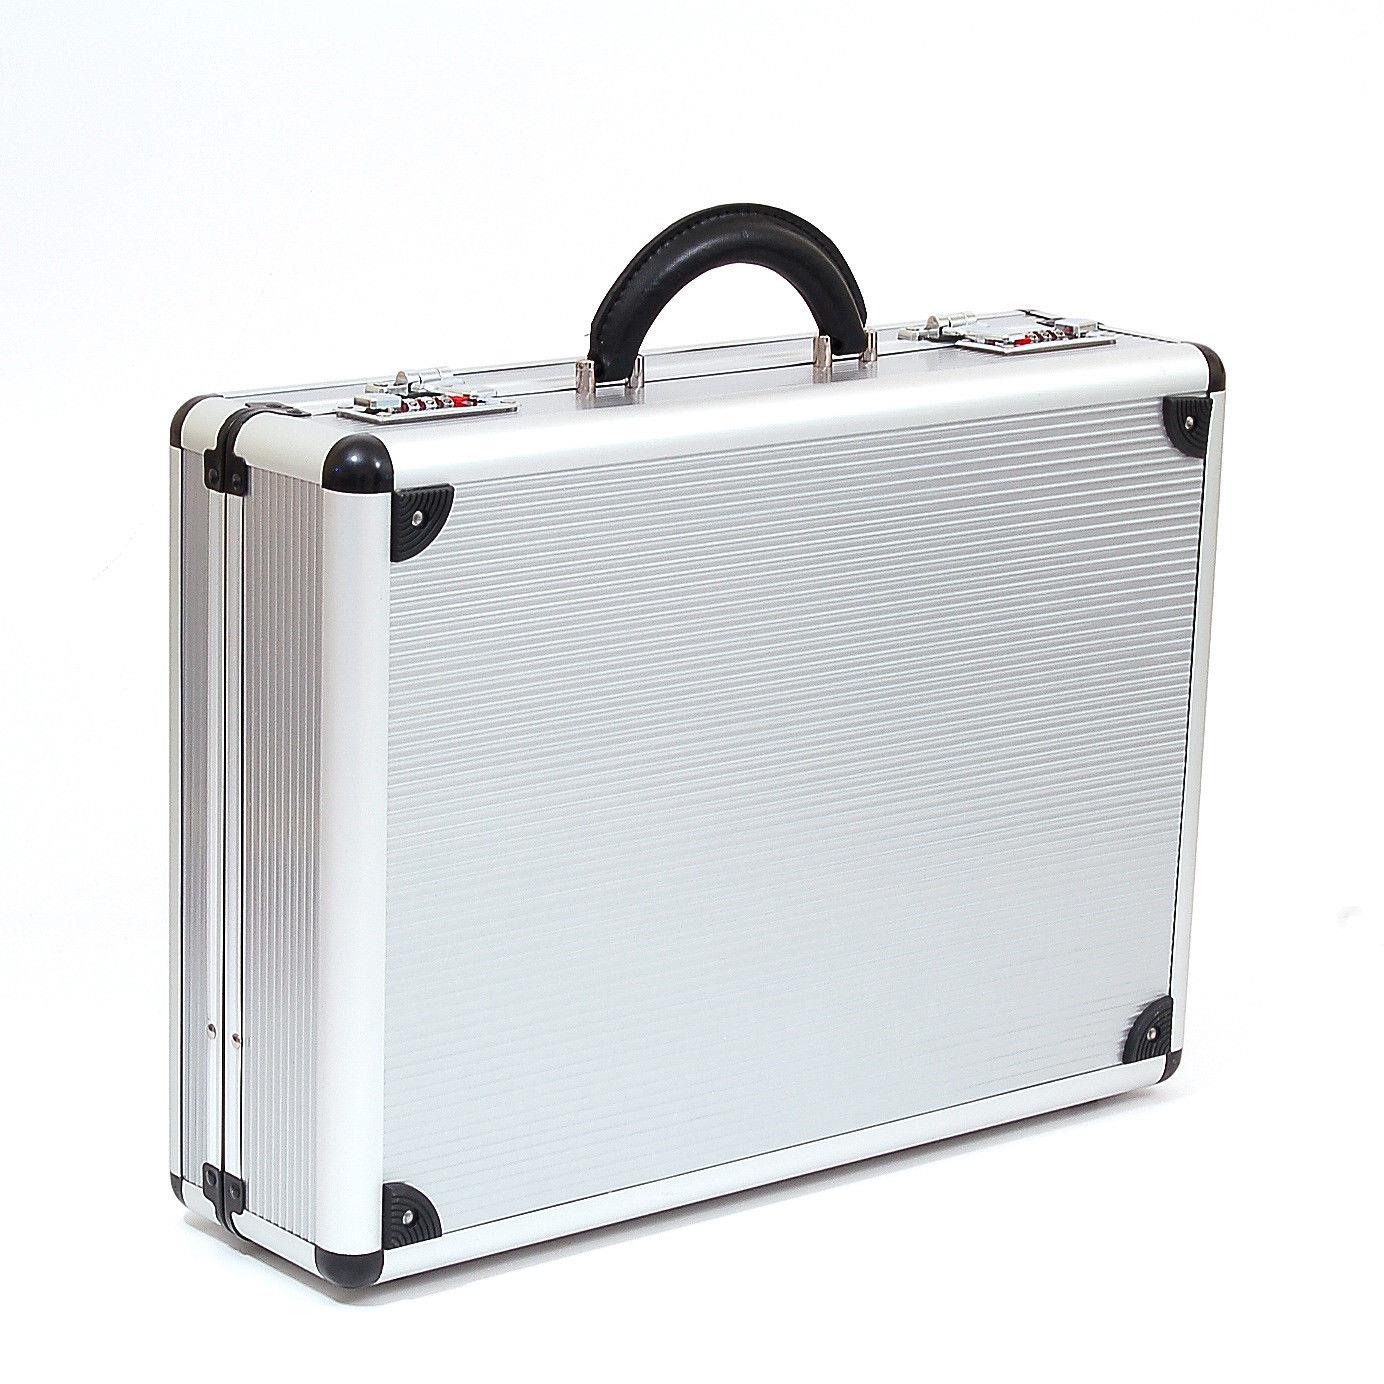 Hard Aluminum Attache Case Business Professional 2 Combination Locks Briefcase